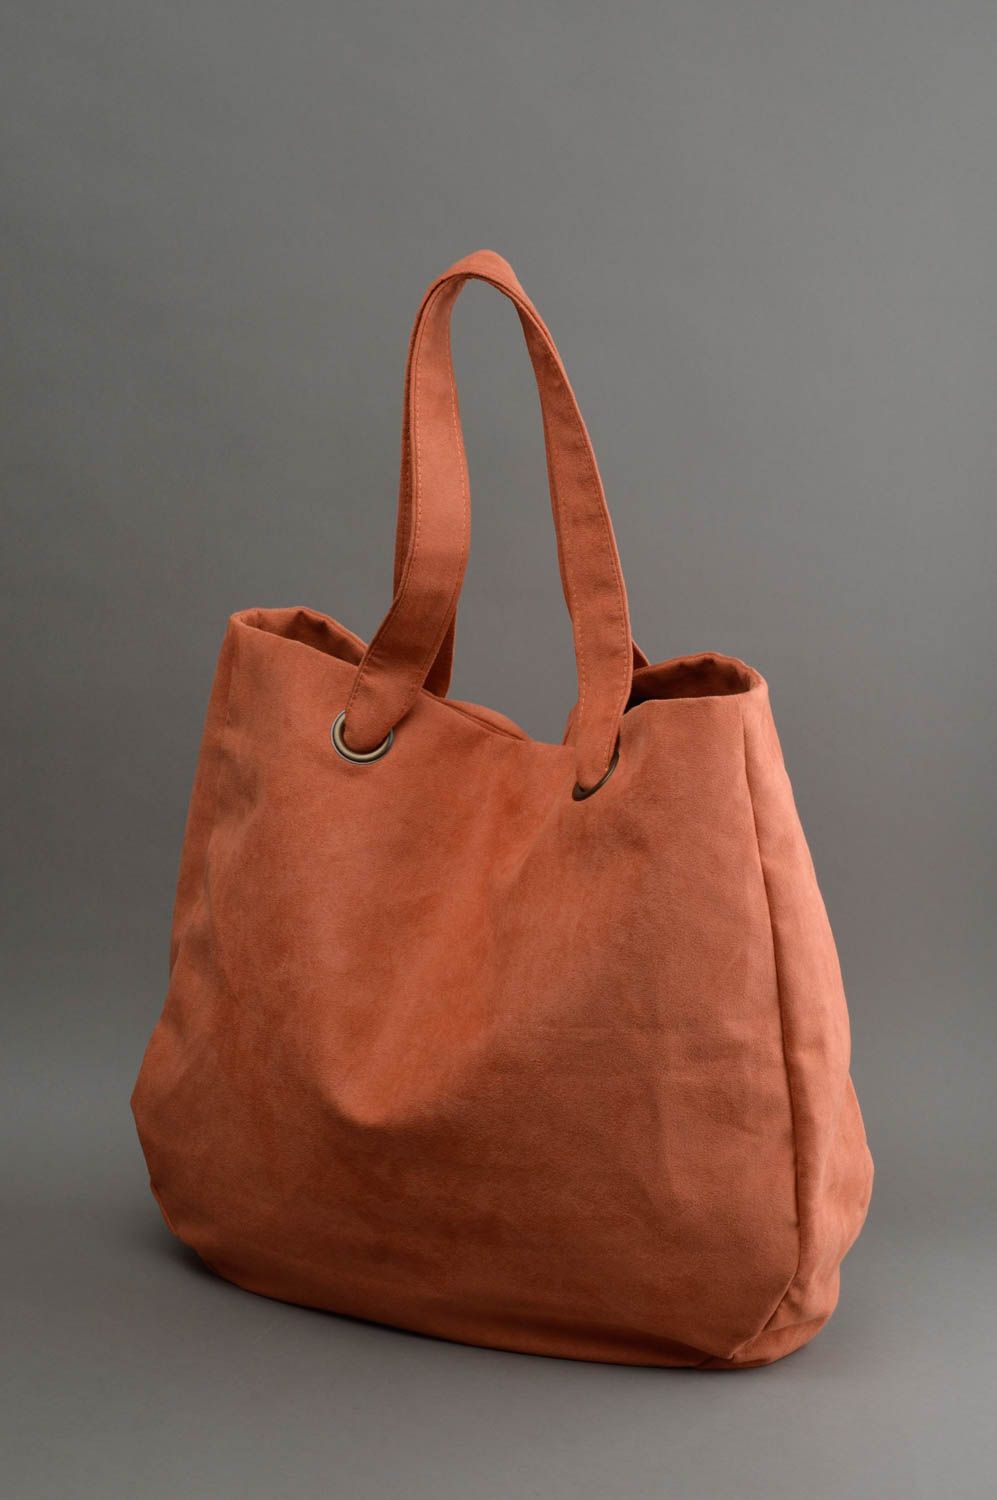 Designer handbag handmade bag for women red fabric purse suede bag gift for her photo 2